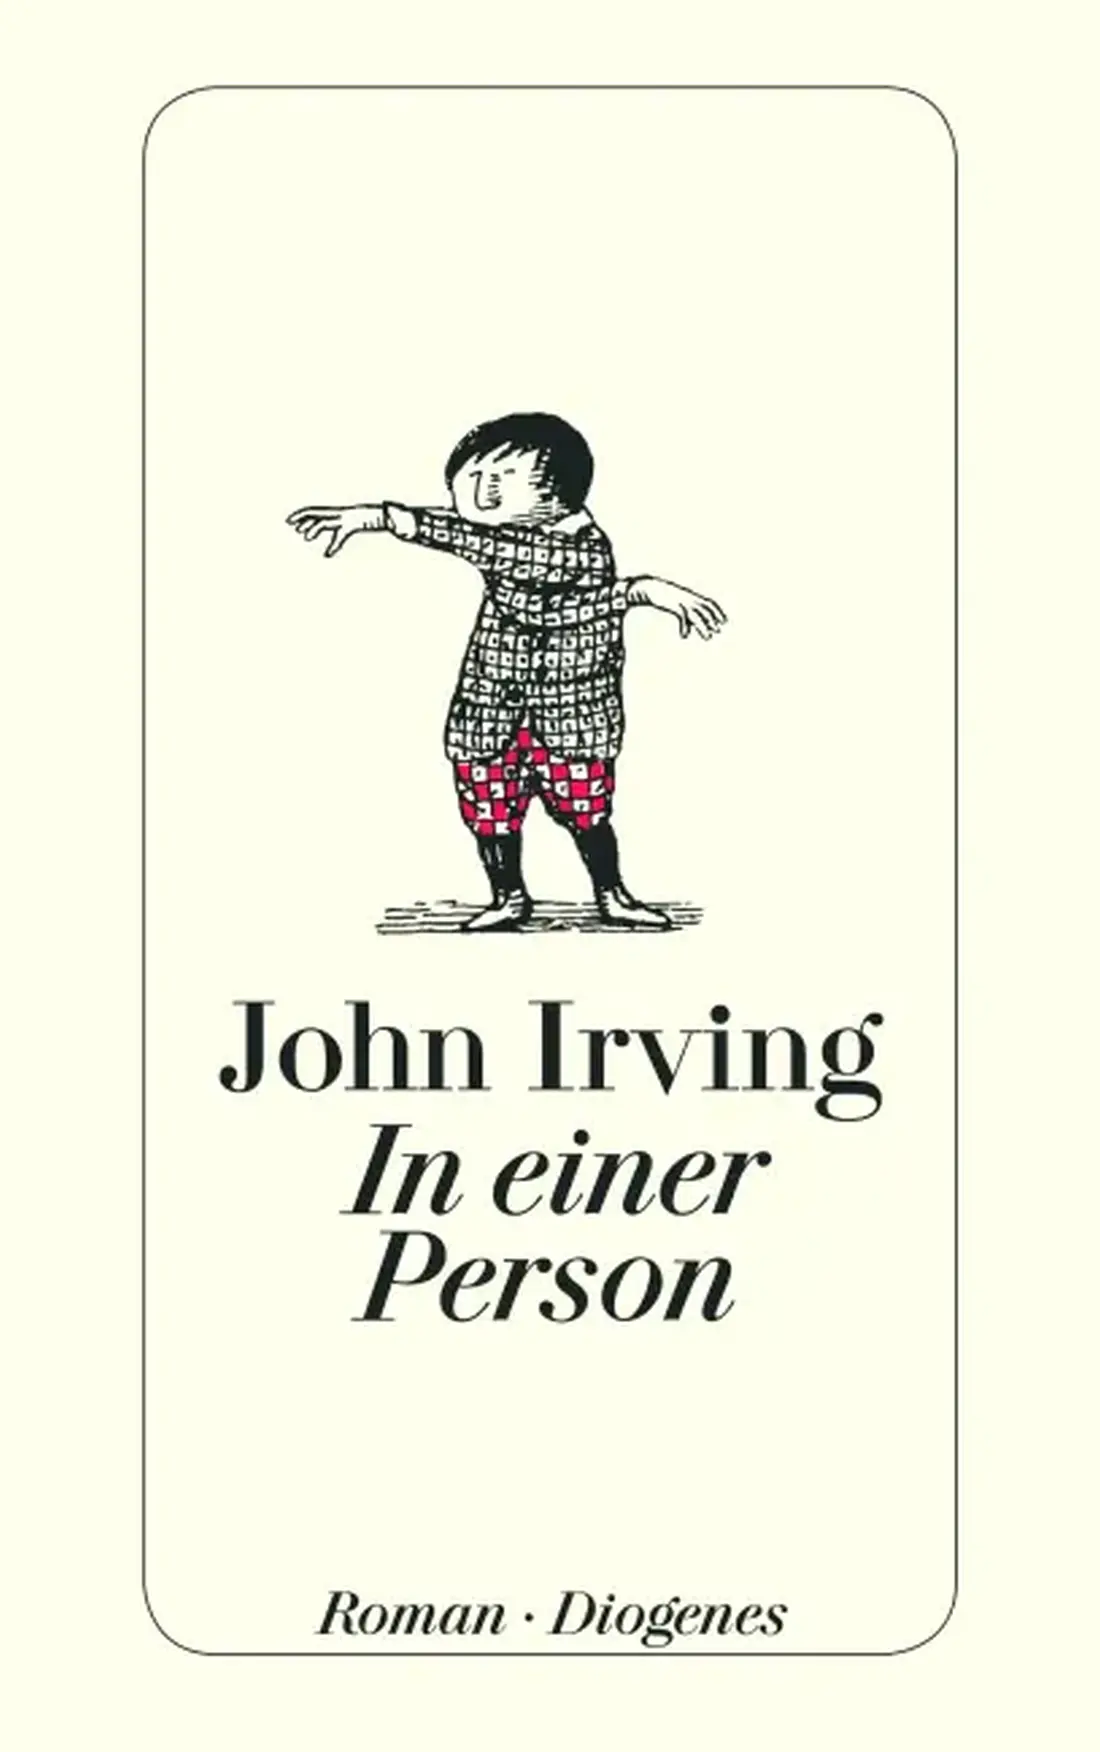 LITL004 [Podcast] Rezension: John Irving - In einer Person